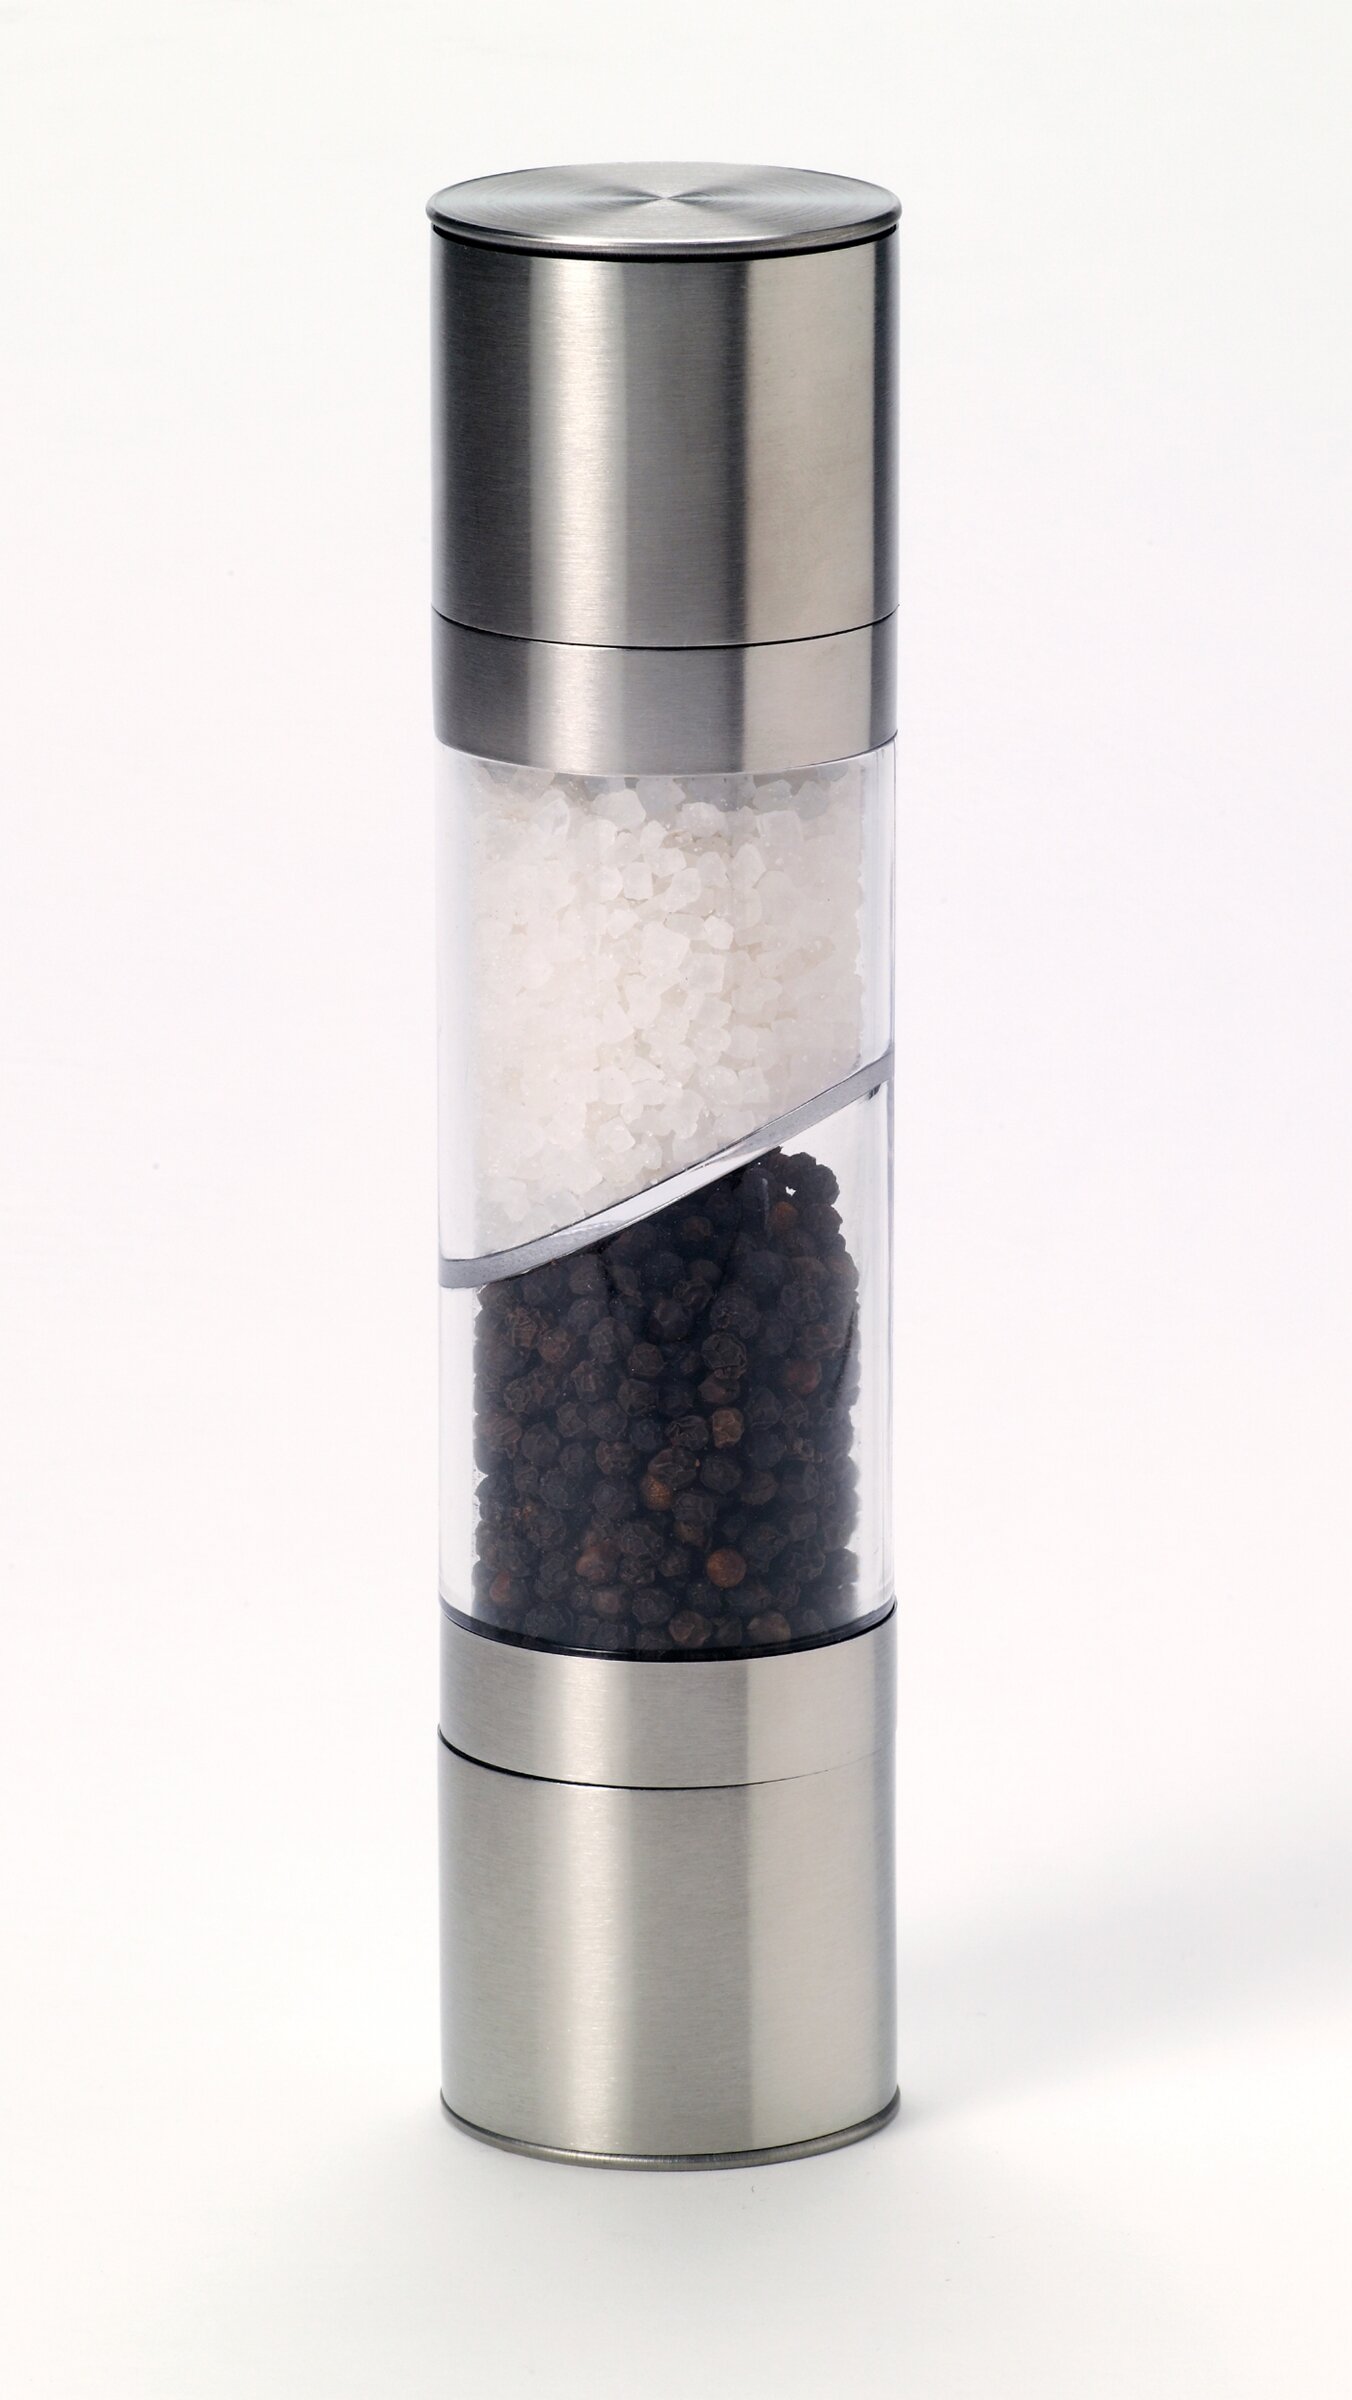 salt and pepper grinder in one